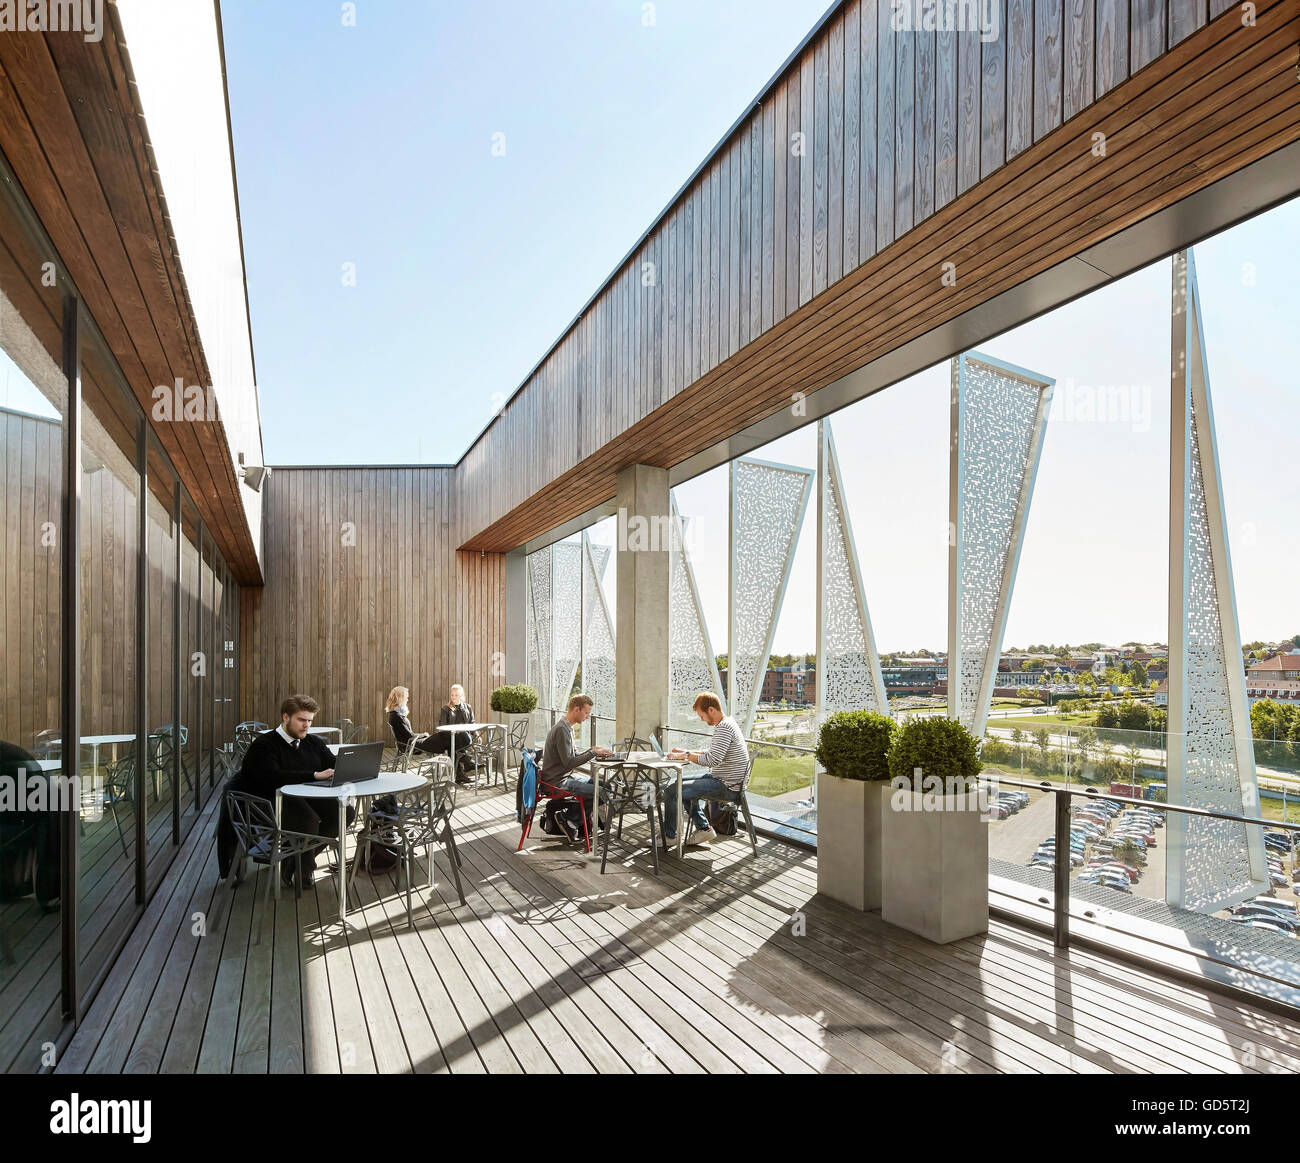 Holz, geschmückt mit Dachterrasse. SDU Campus Kolding, Kolding, Dänemark. Architekt: Henning Larsen Architects, 2015. Stockfoto